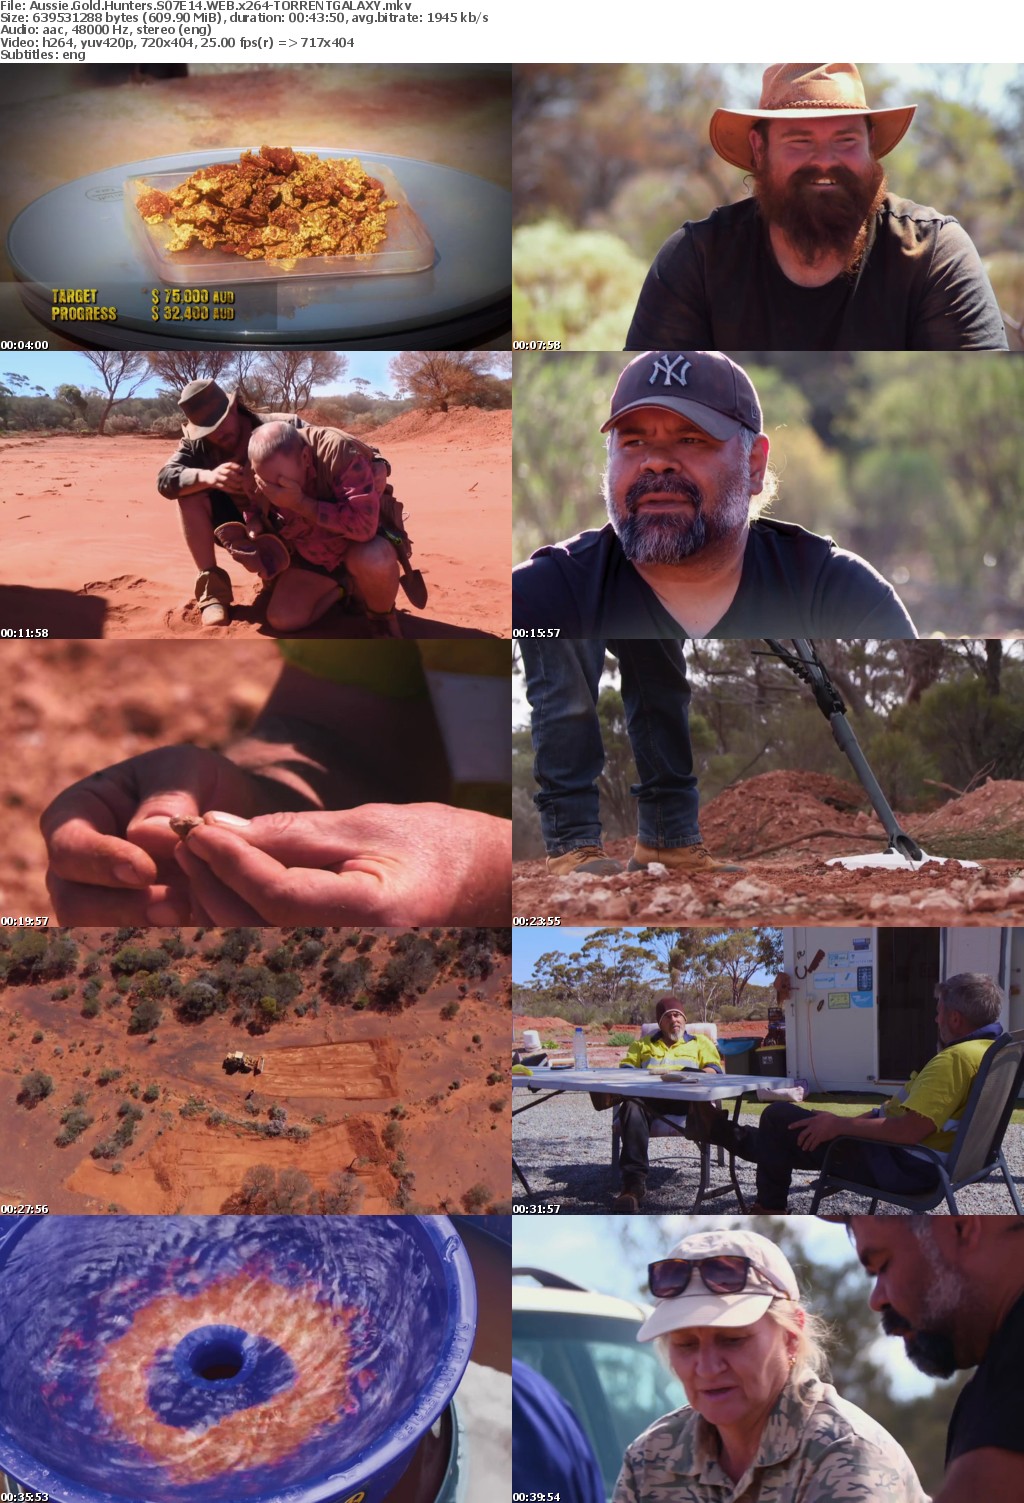 Aussie Gold Hunters S07E14 WEB x264-GALAXY